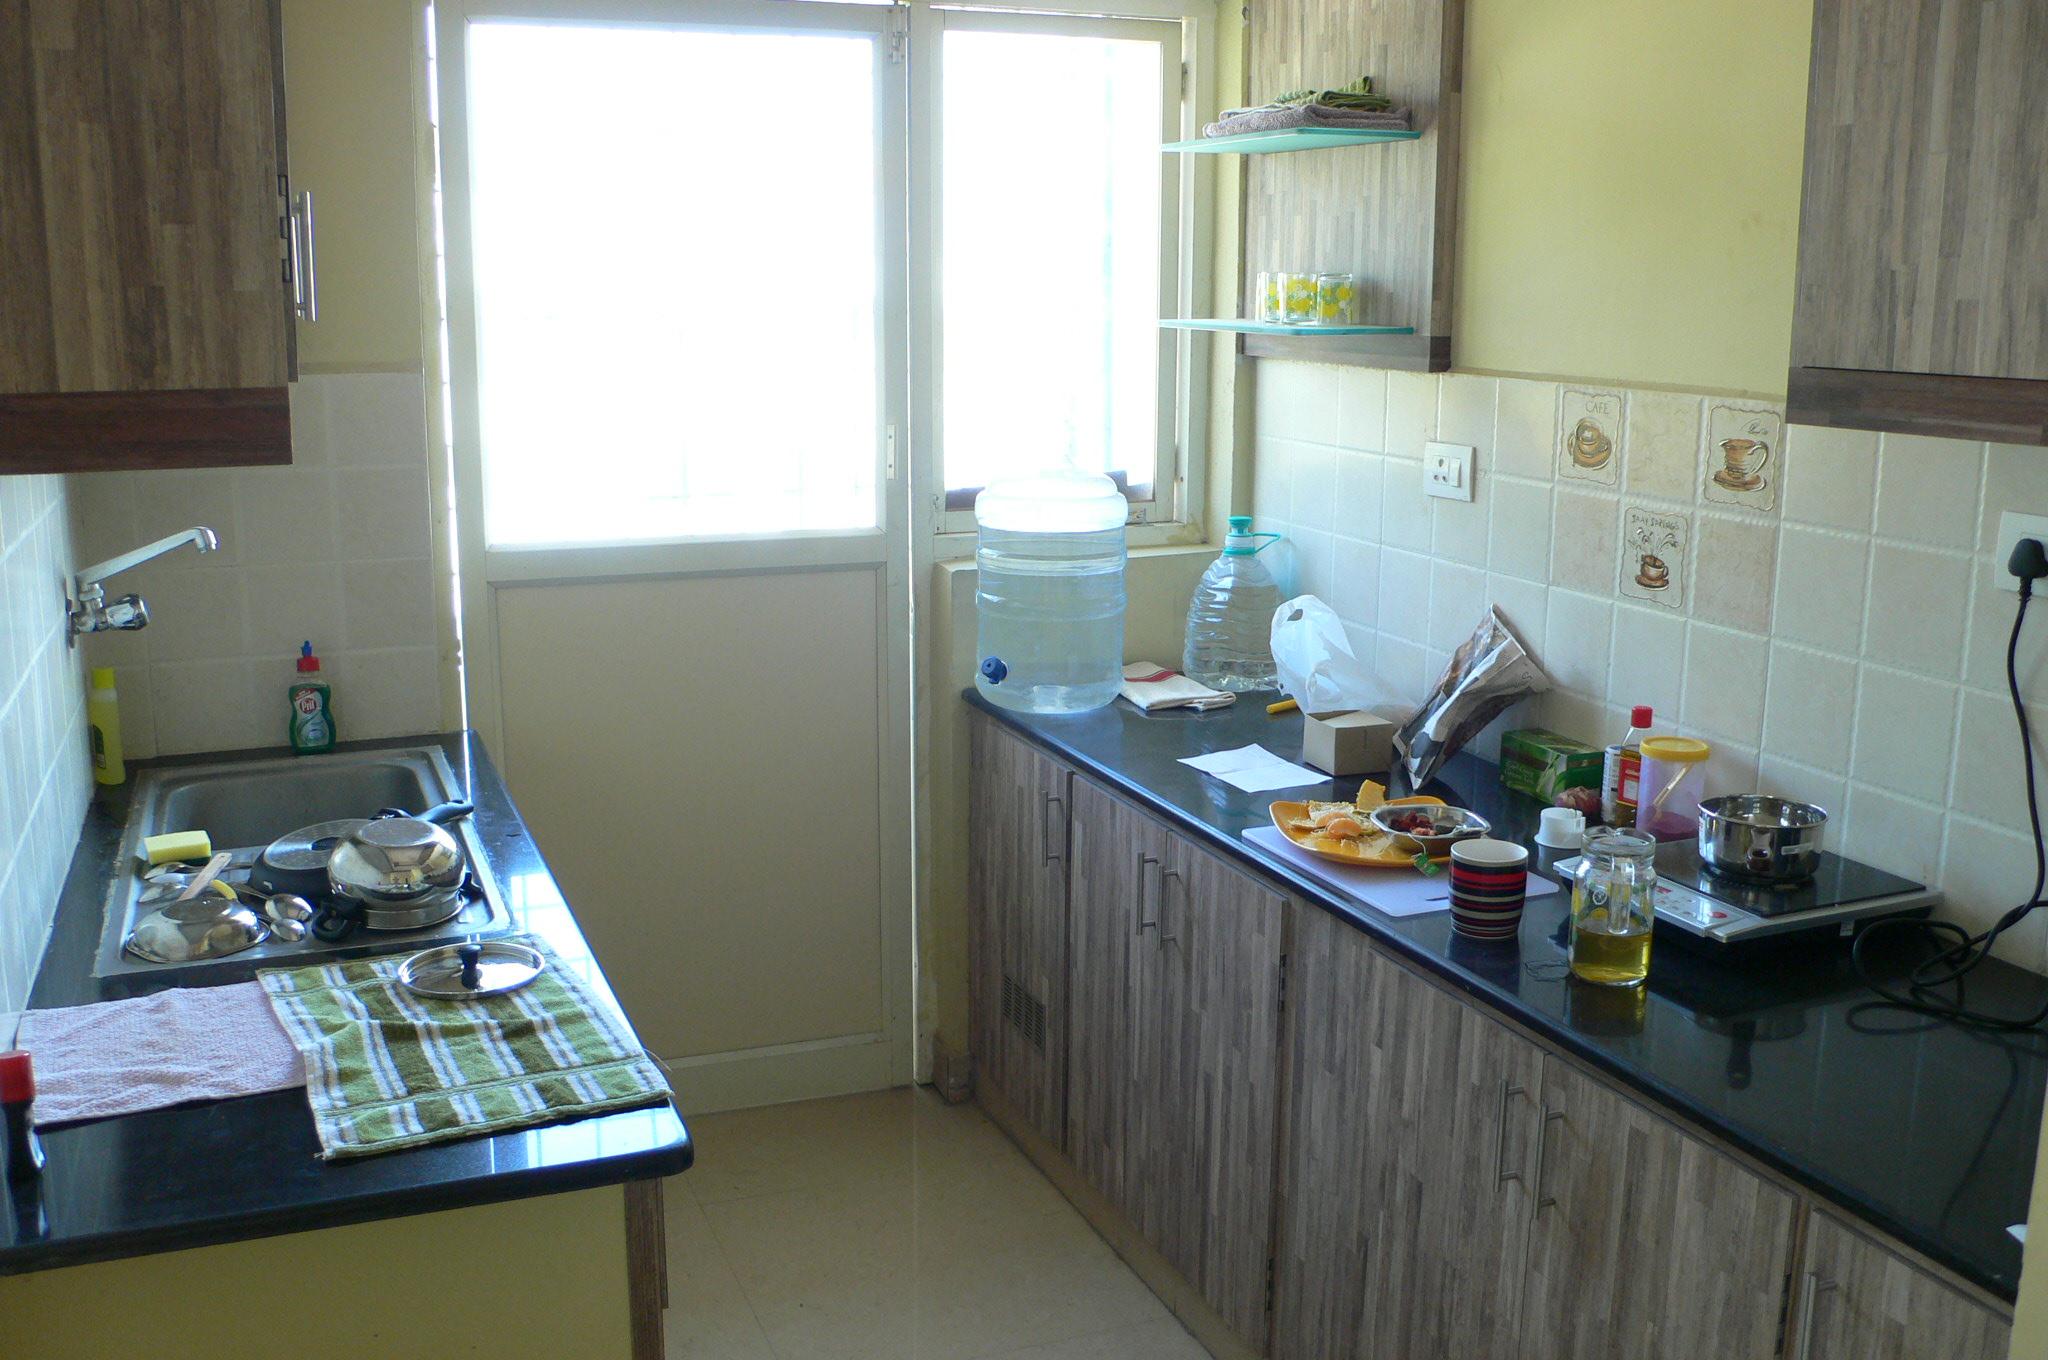  The Kitchen